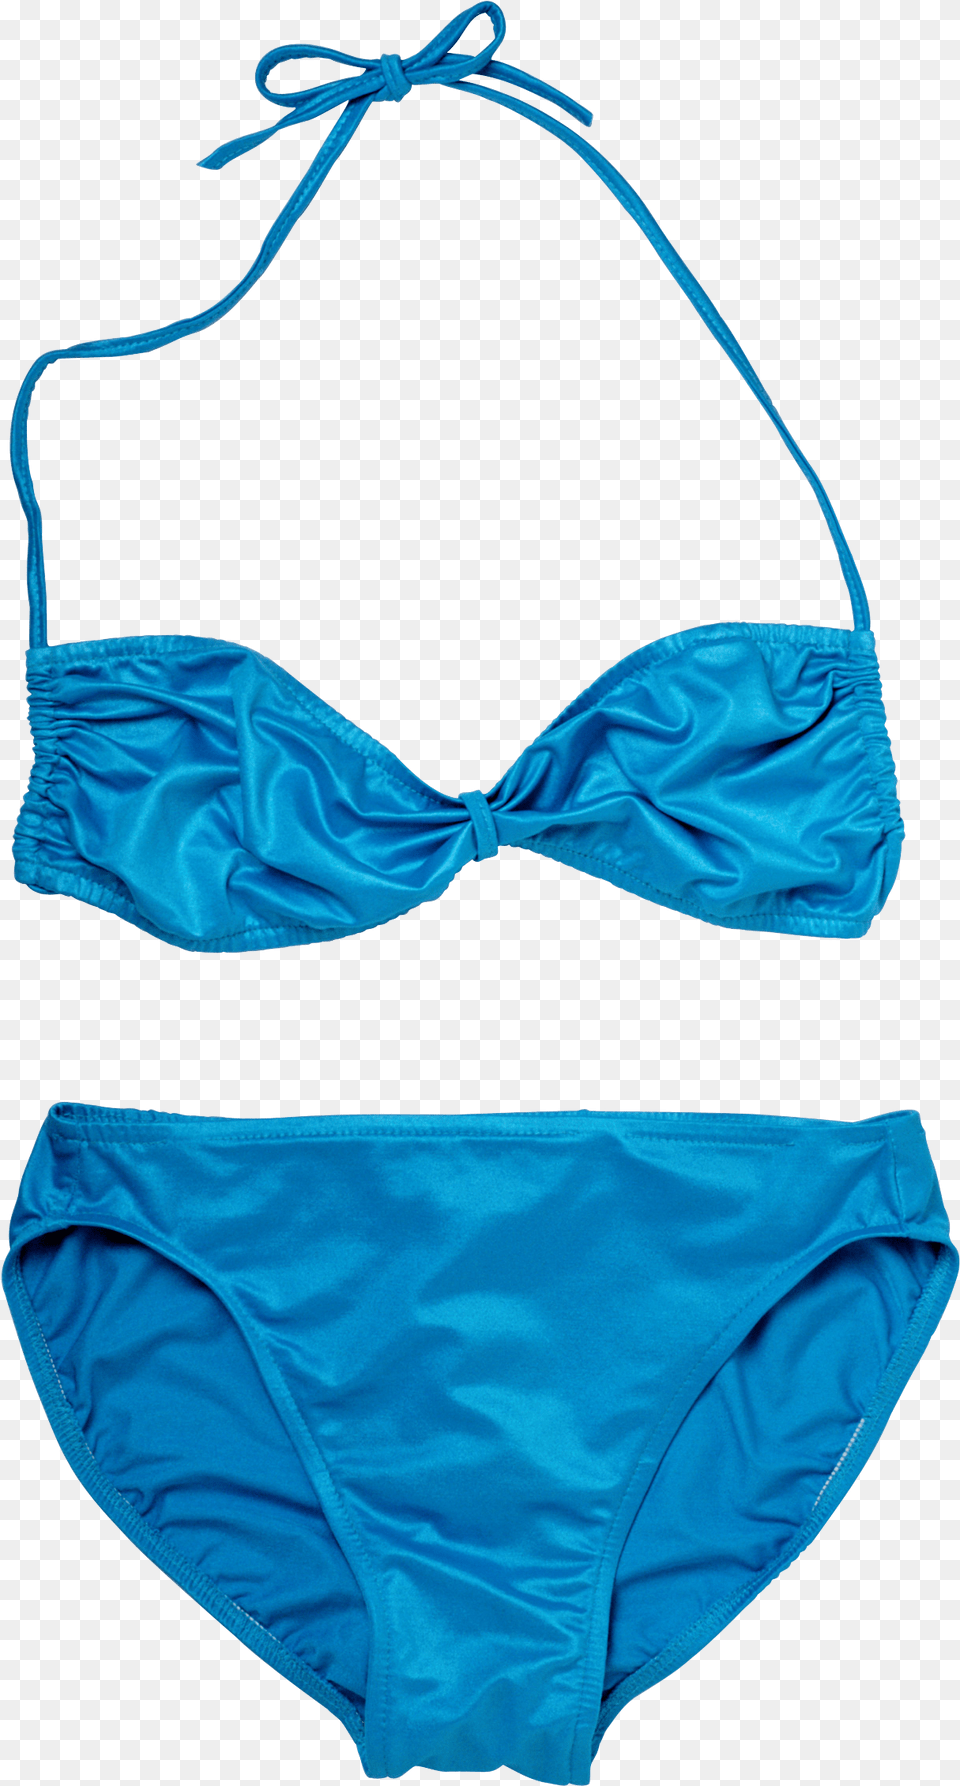 Bikini Blue Bikini, Clothing, Swimwear, Accessories, Bag Png Image